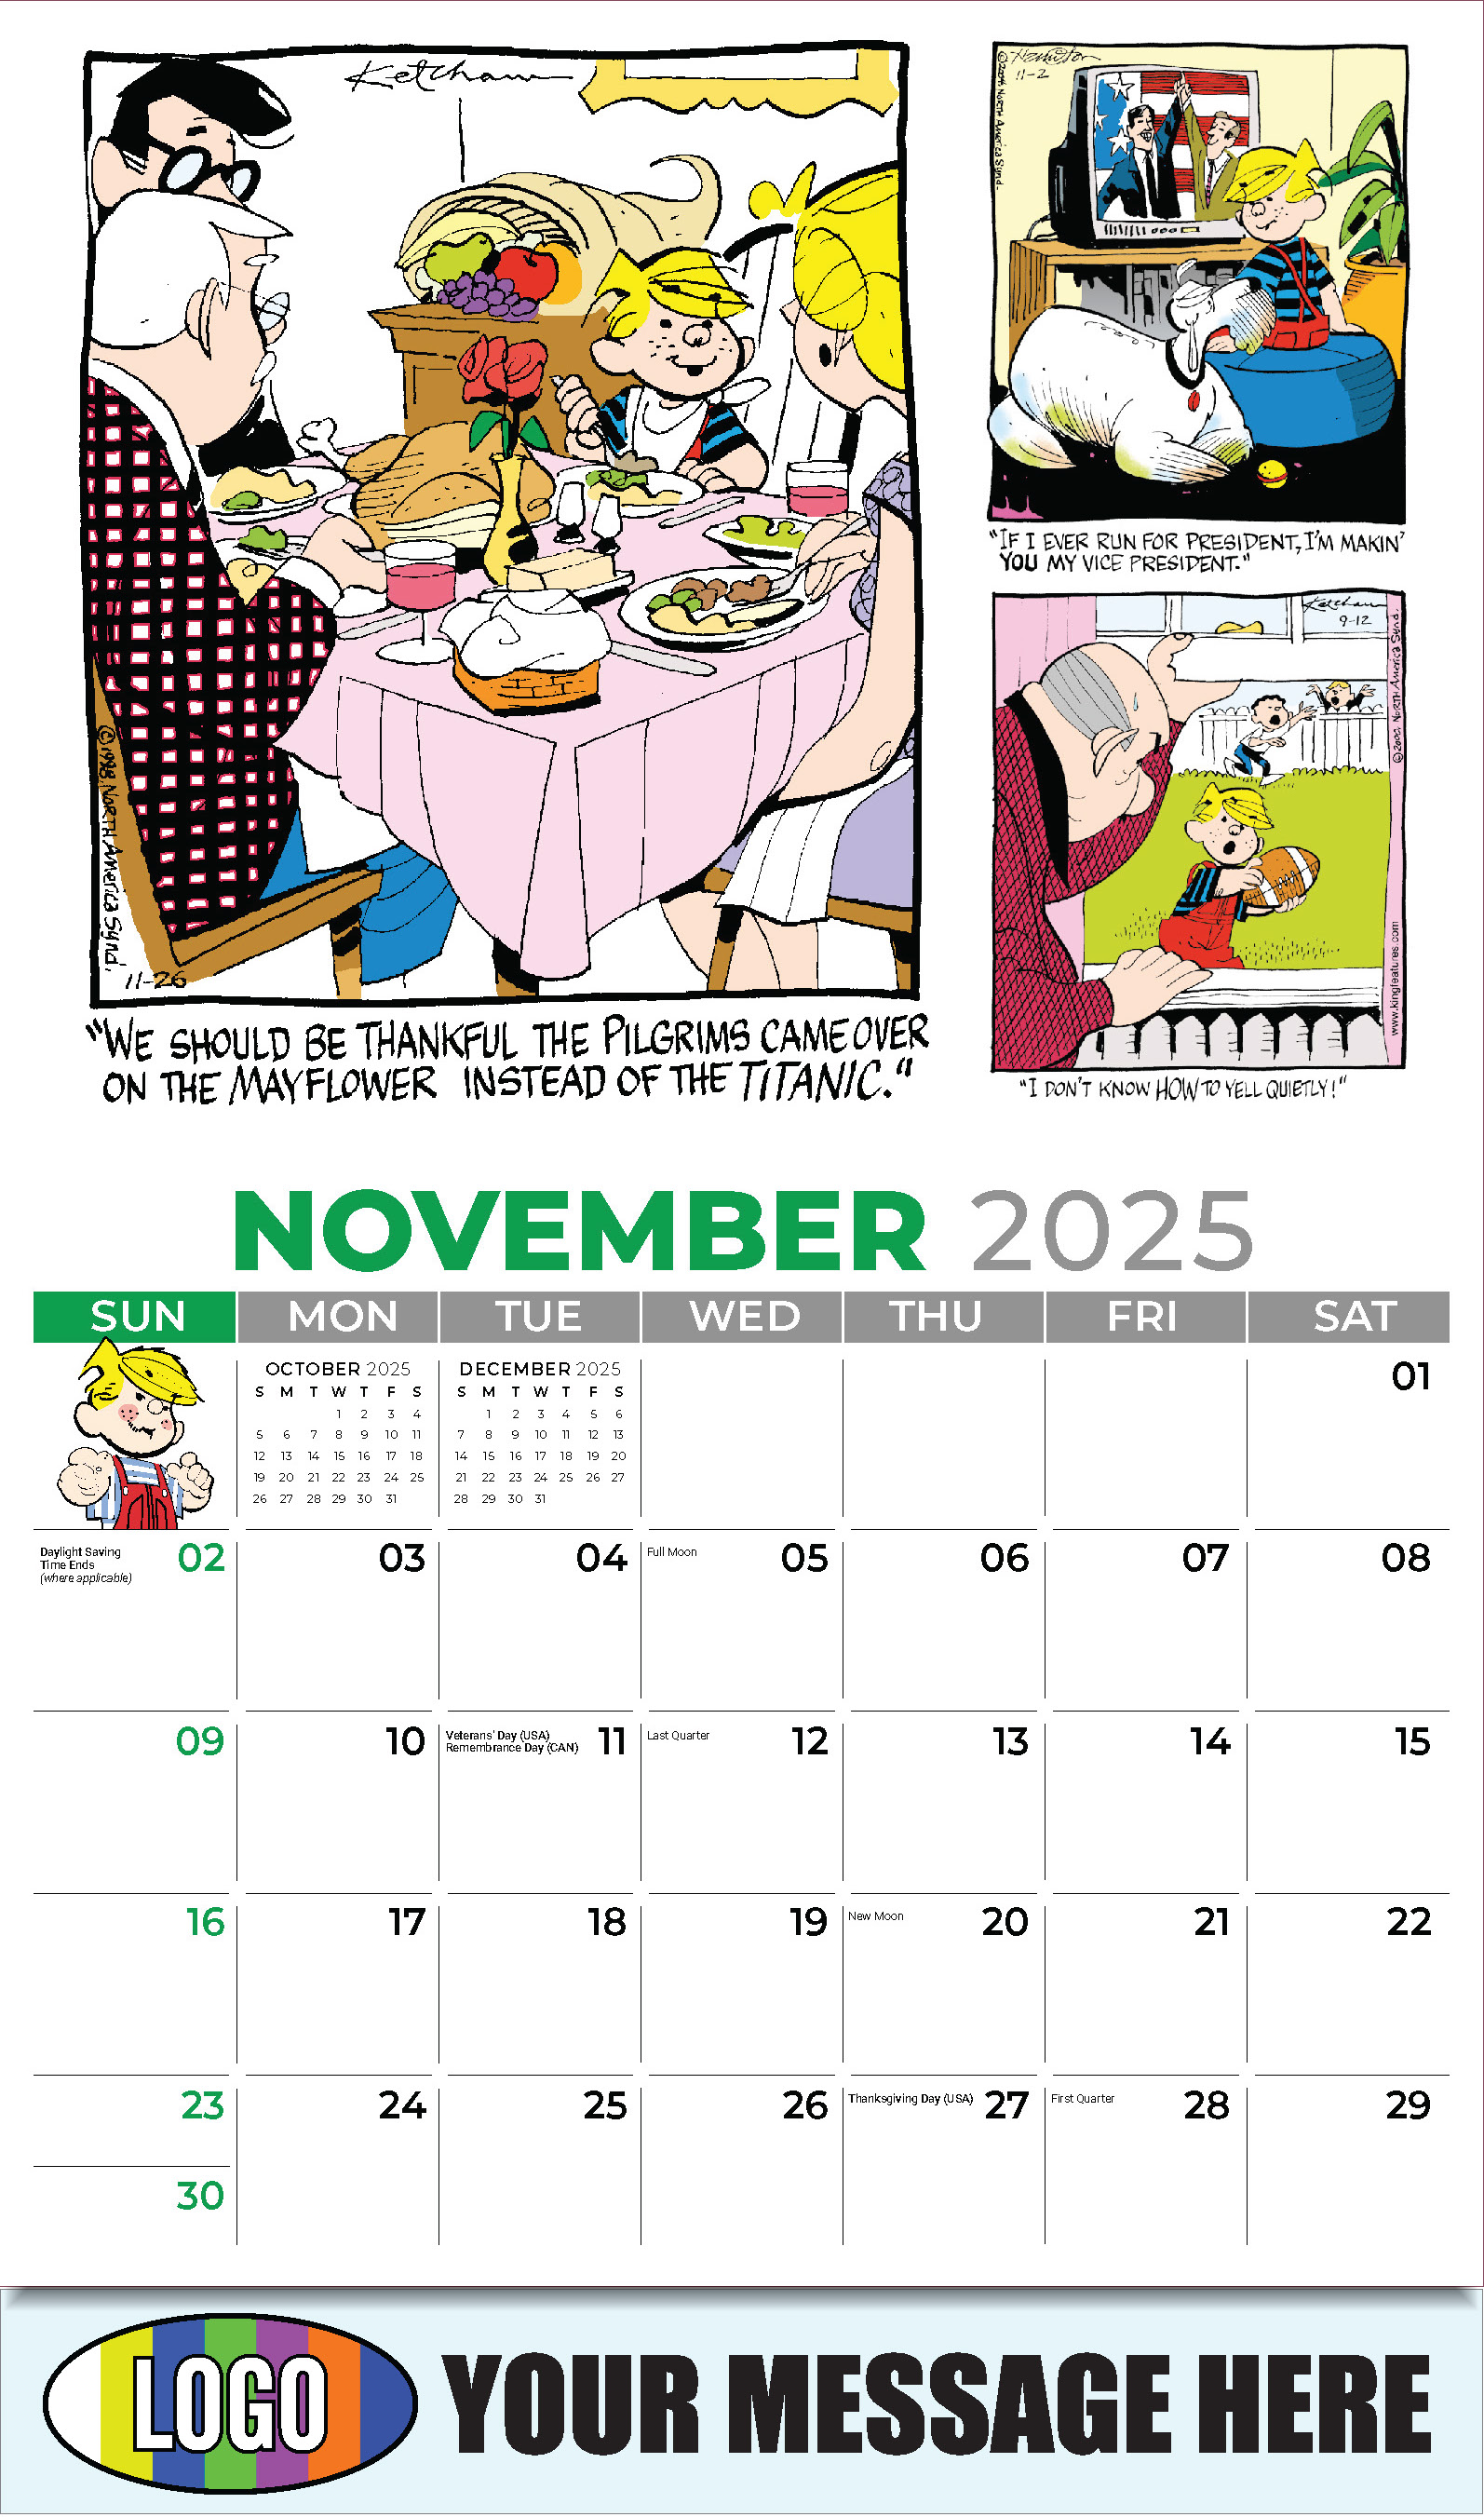 Dennis the Menace 2025 Business Promotional Wall Calendar - November